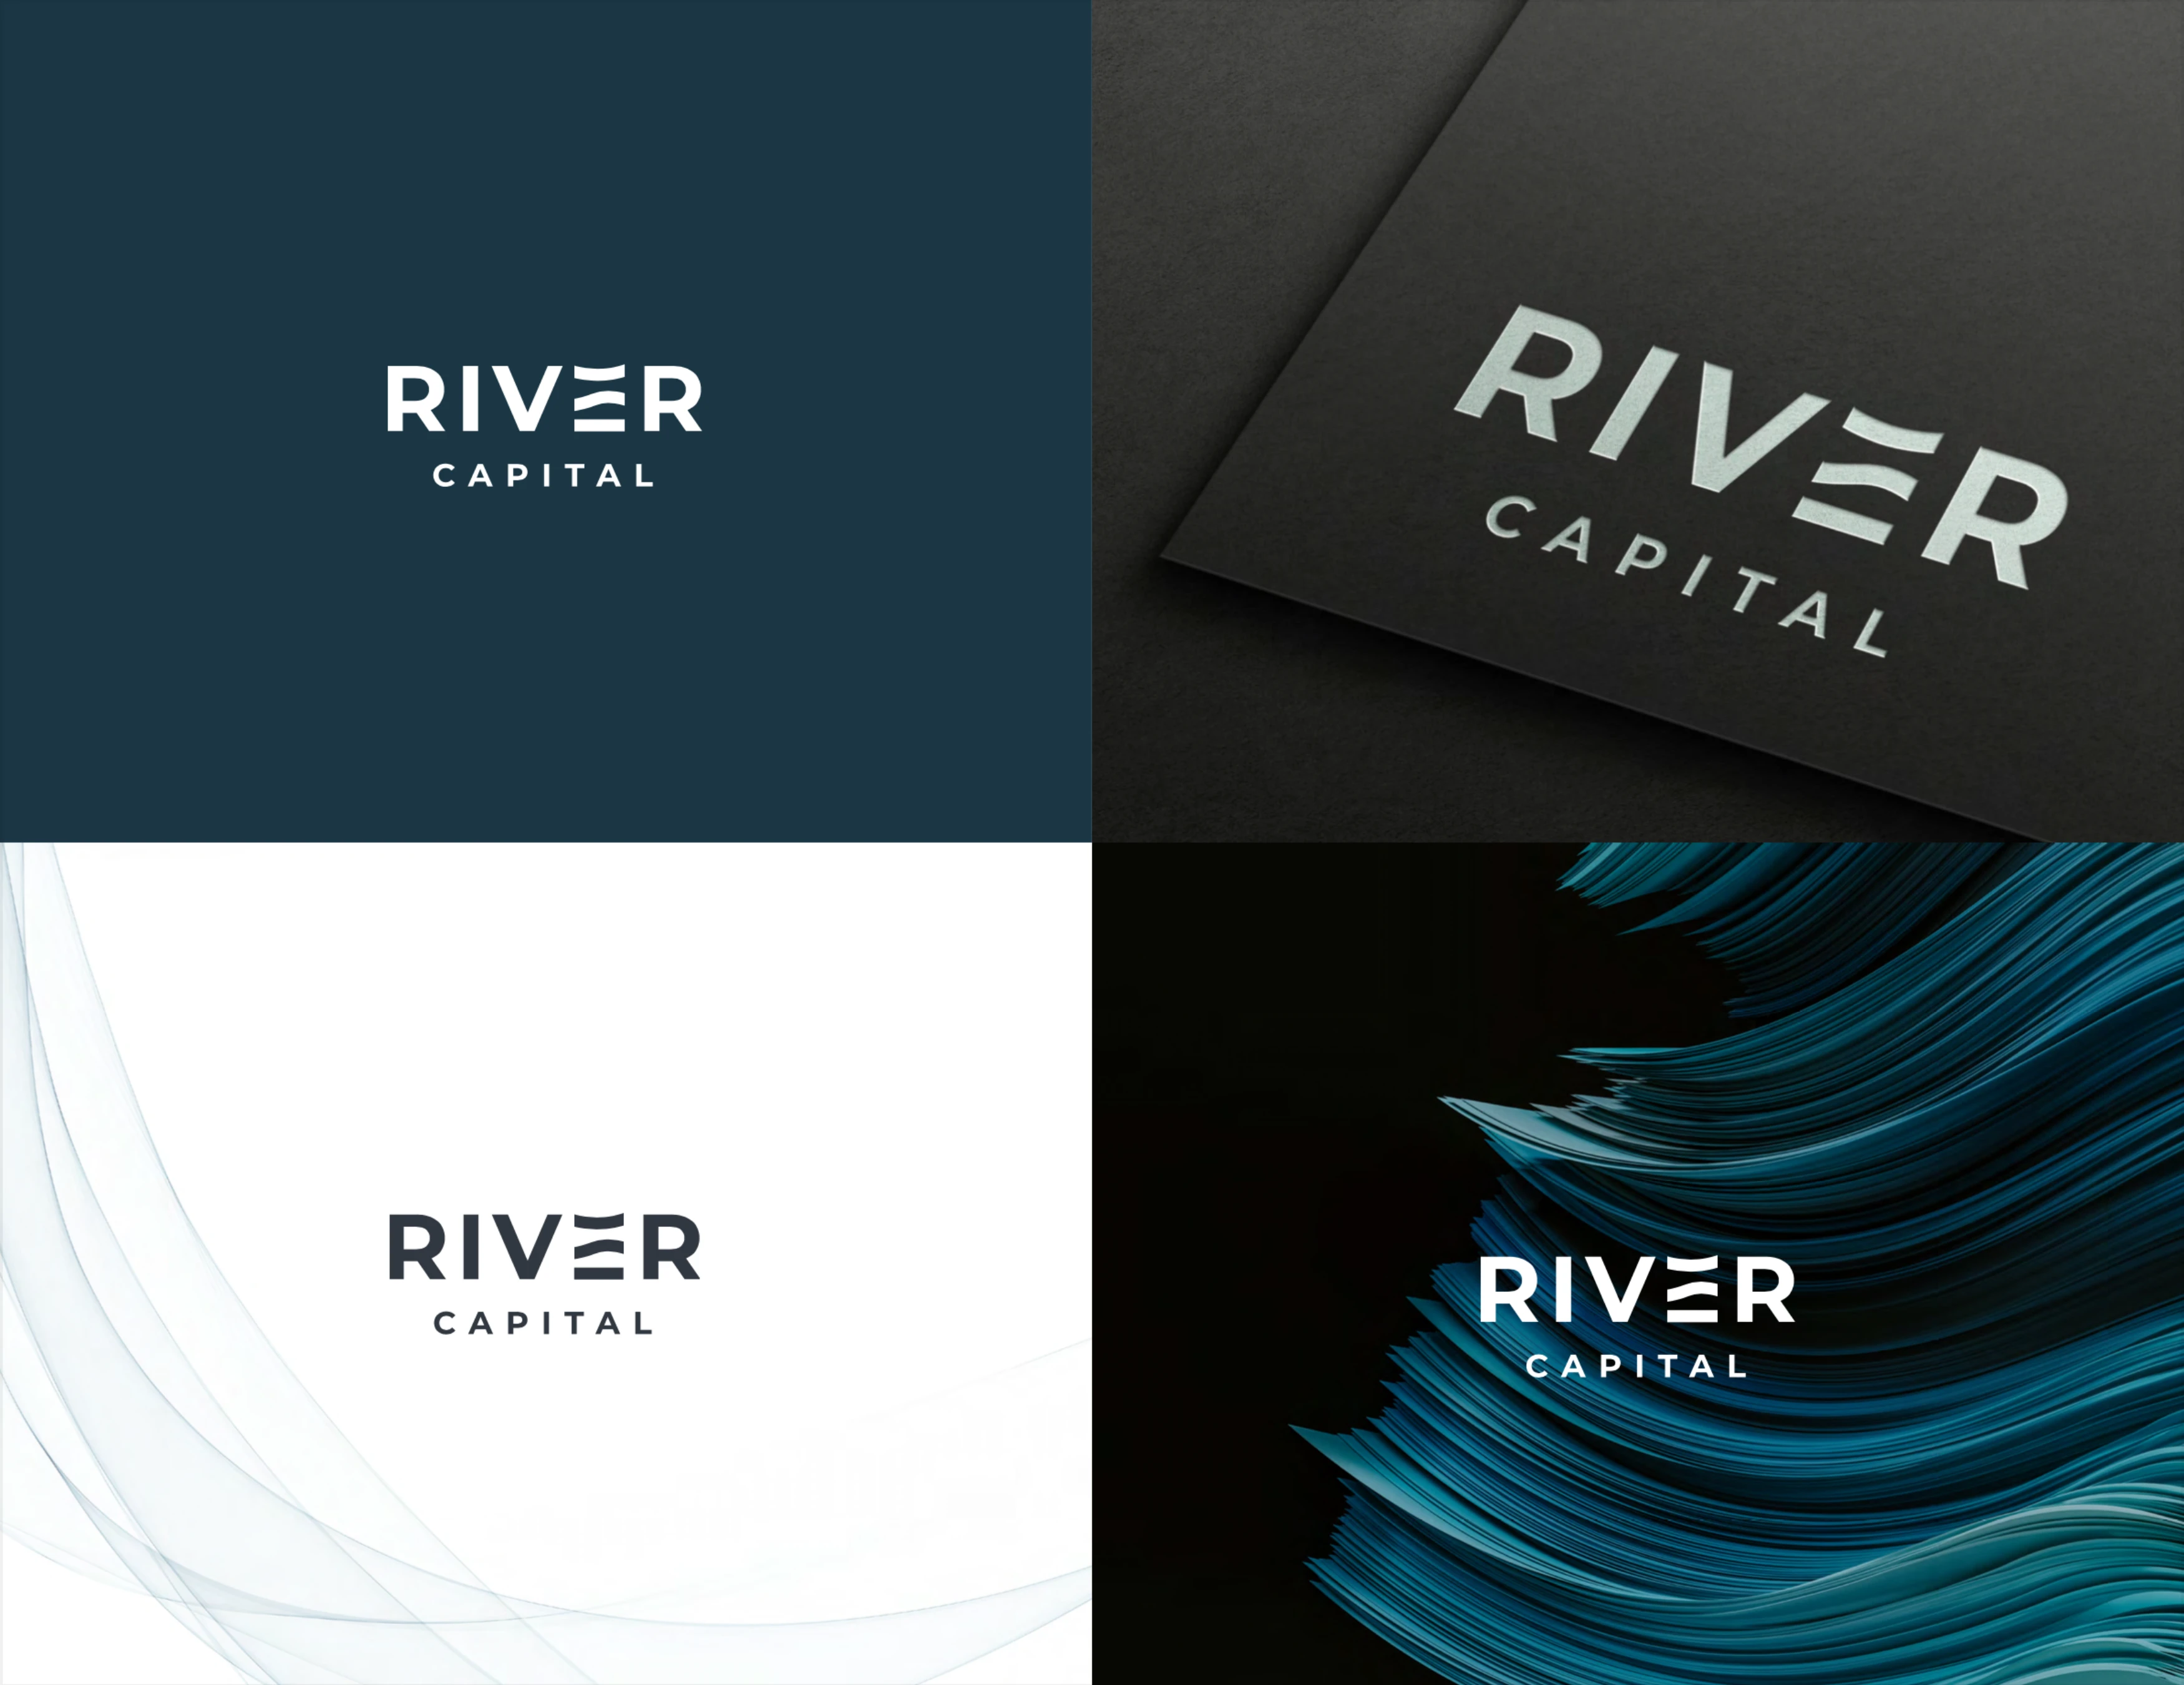 RiverCapital logos